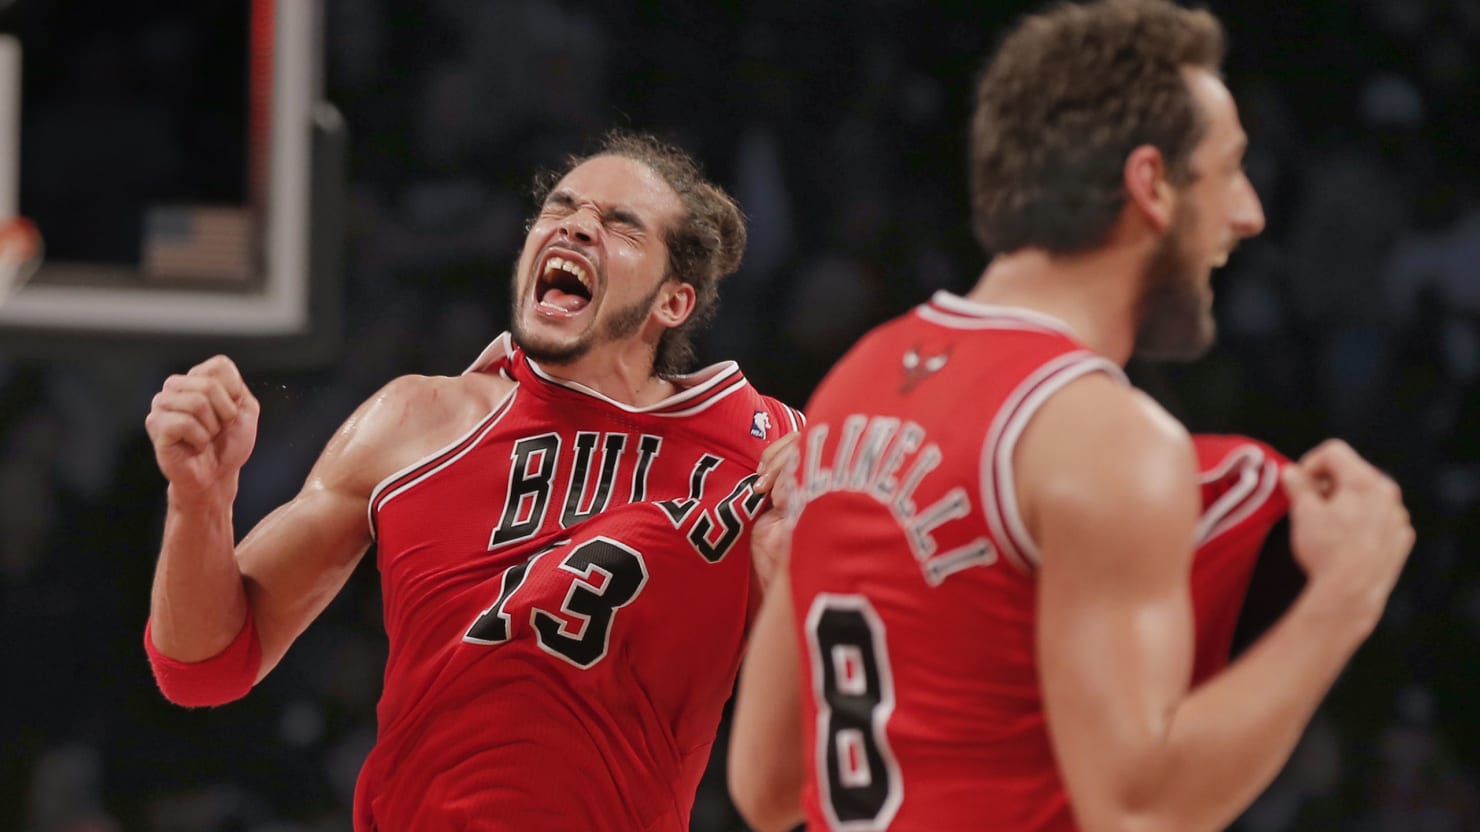 Bulls' Joakim Noah wins Defensive Player of the Year - Sports